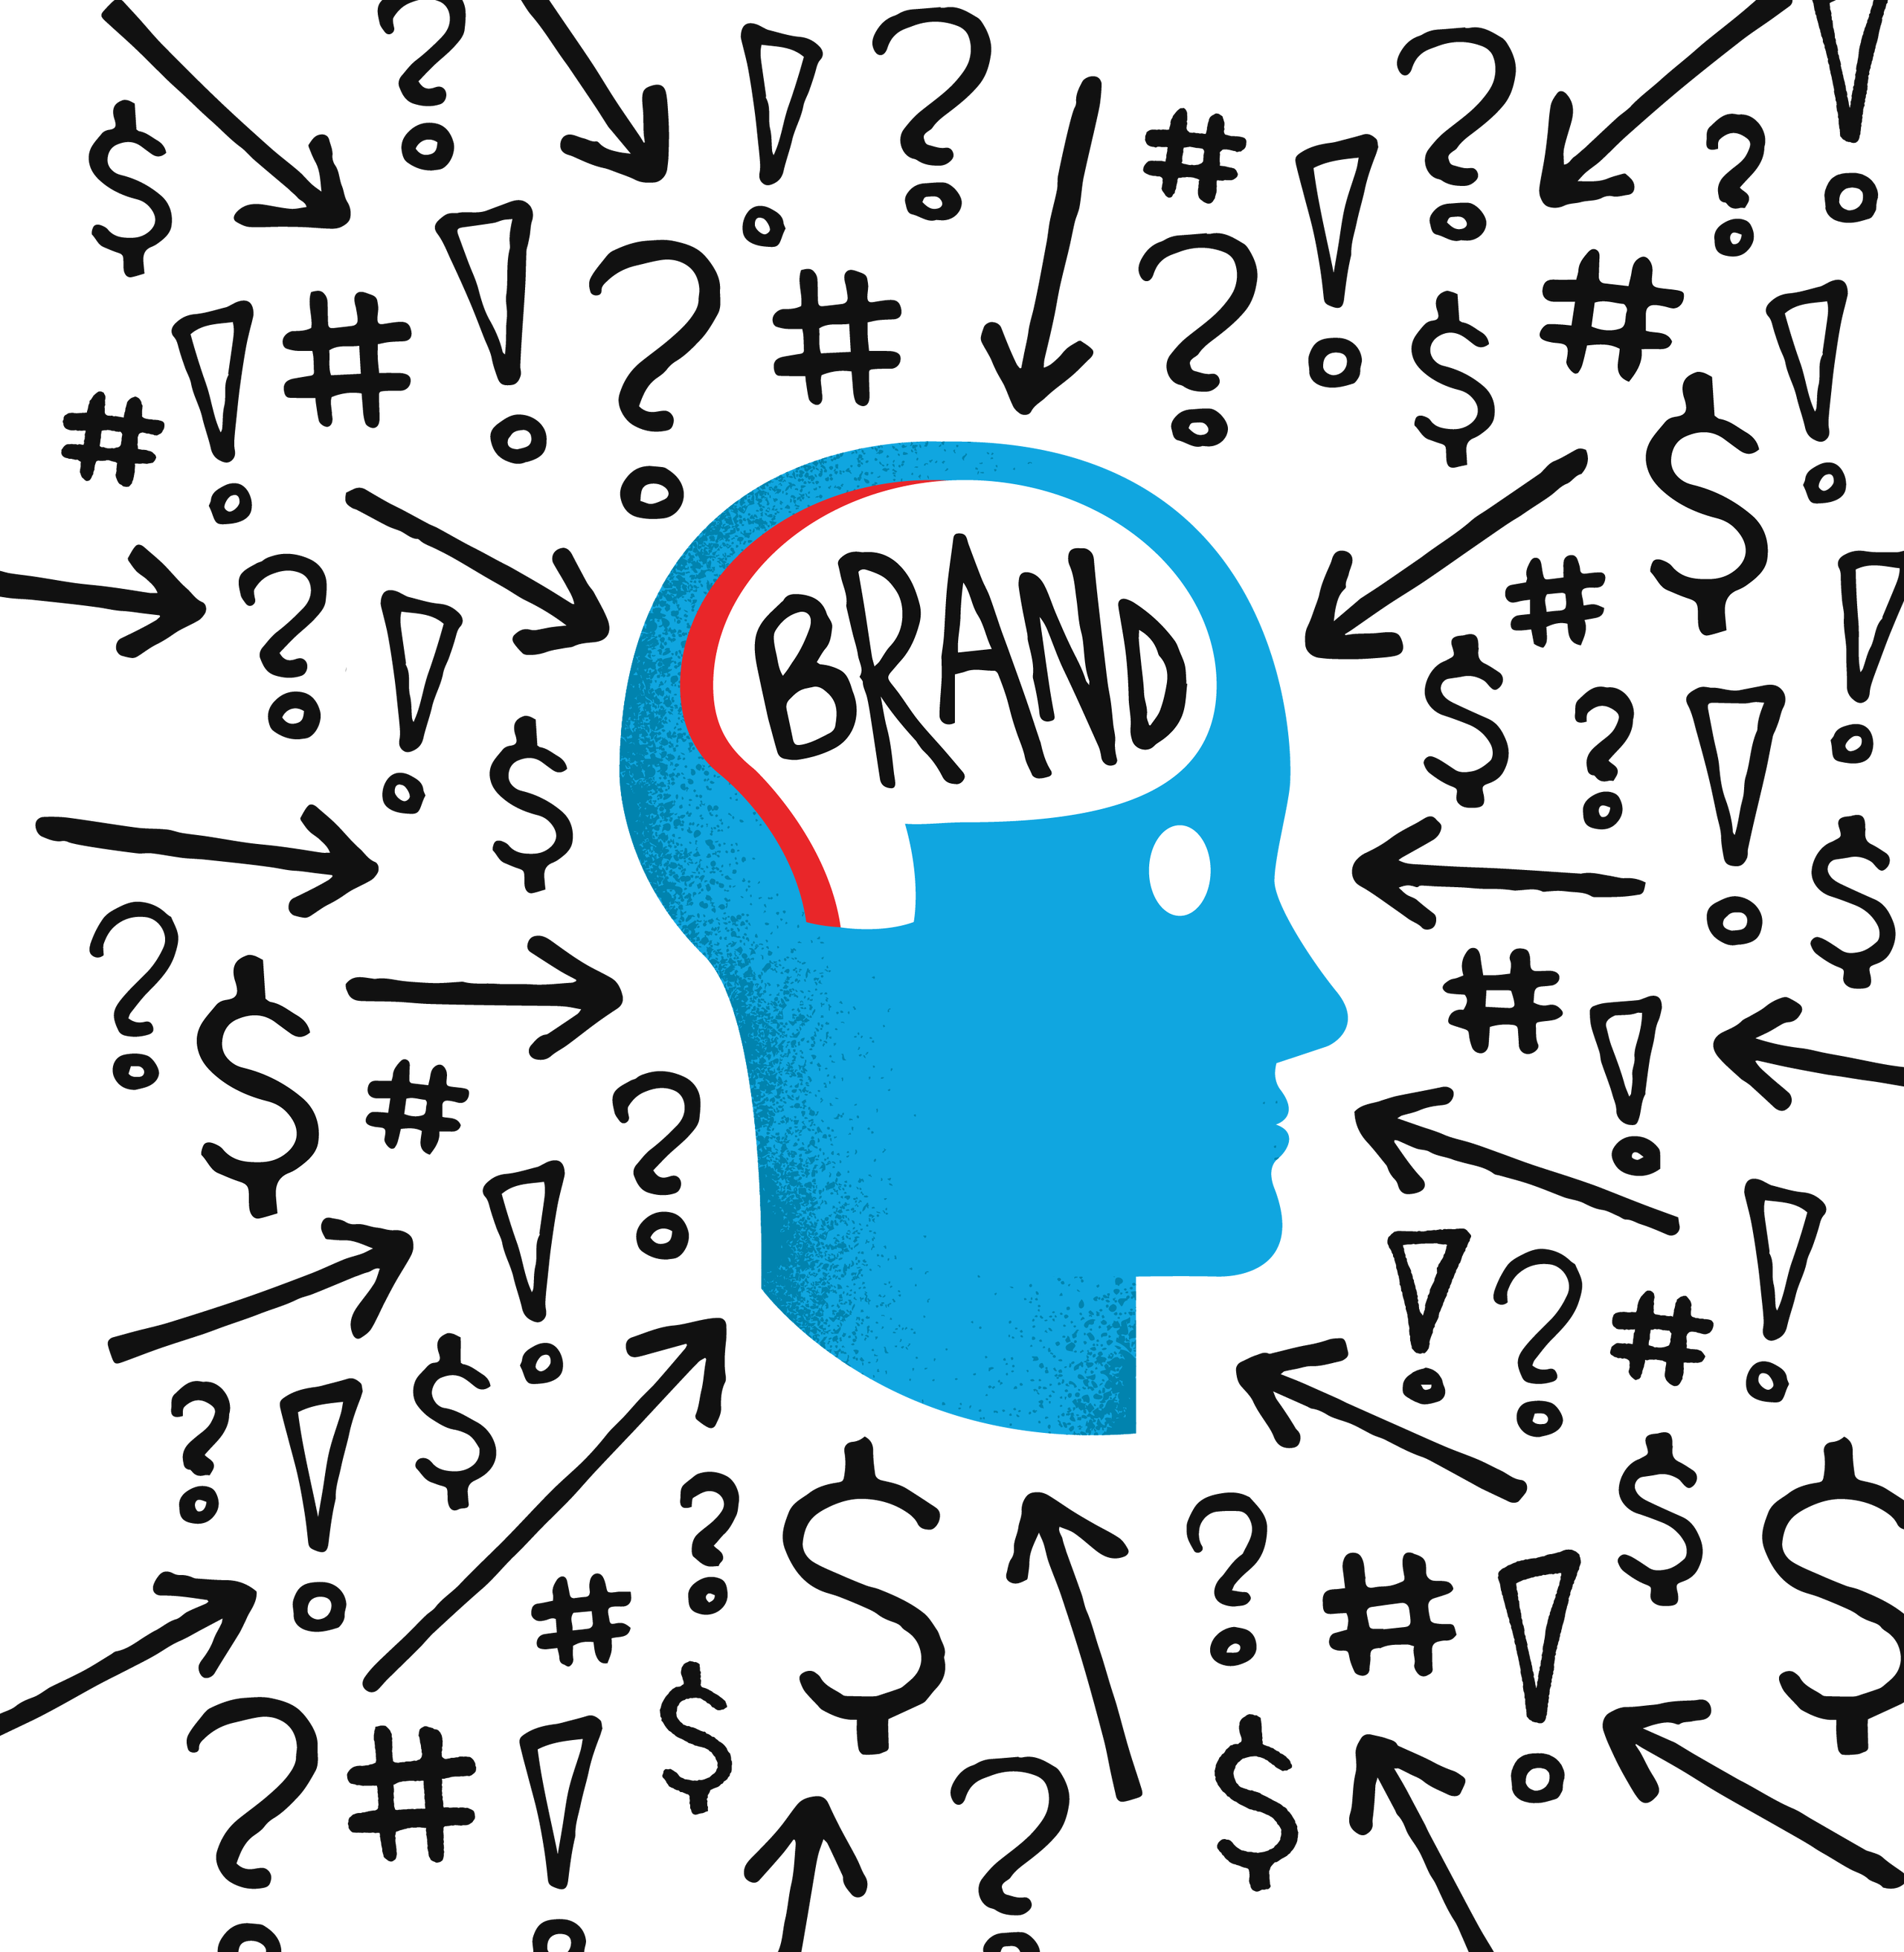 branding-vs-marketing-photo-brand-brain-01.png